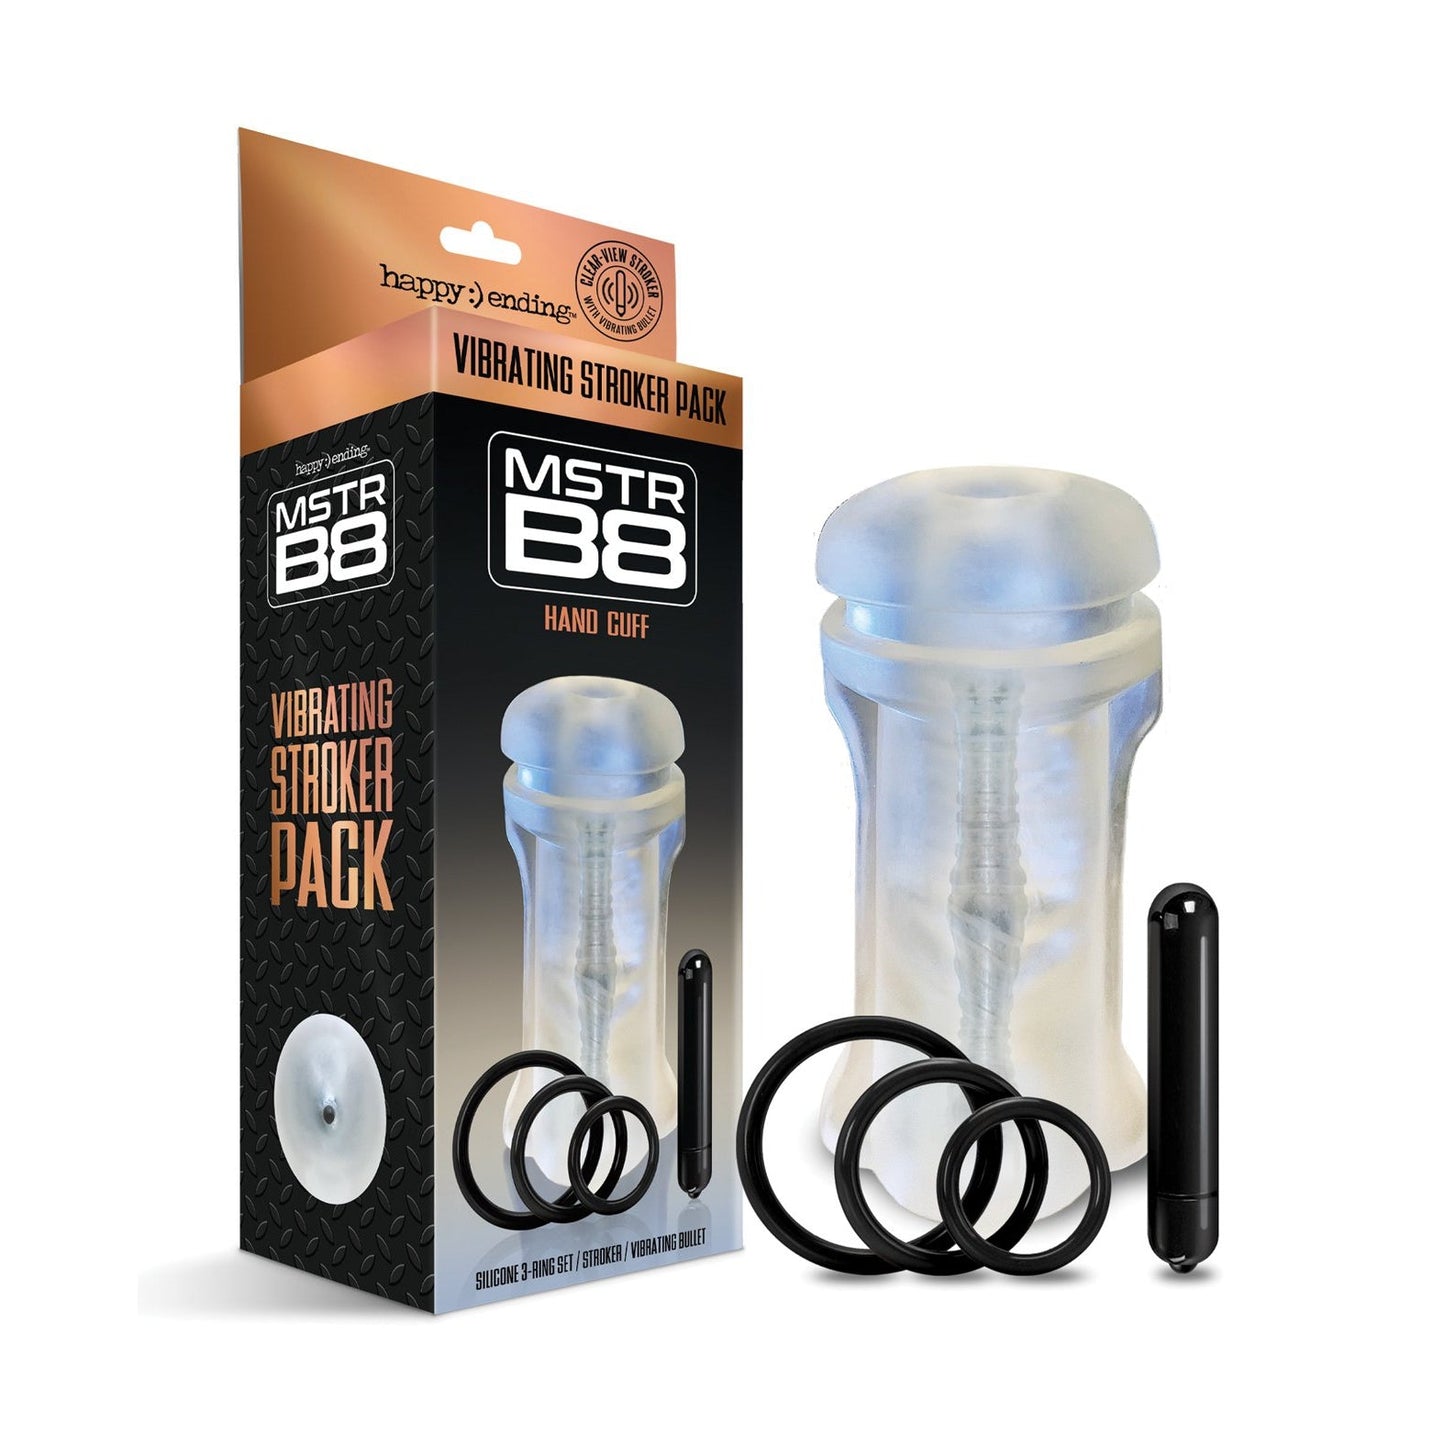 MSTR B8 Vibrating Stroker Pack Hand Cuff - Kit of 5